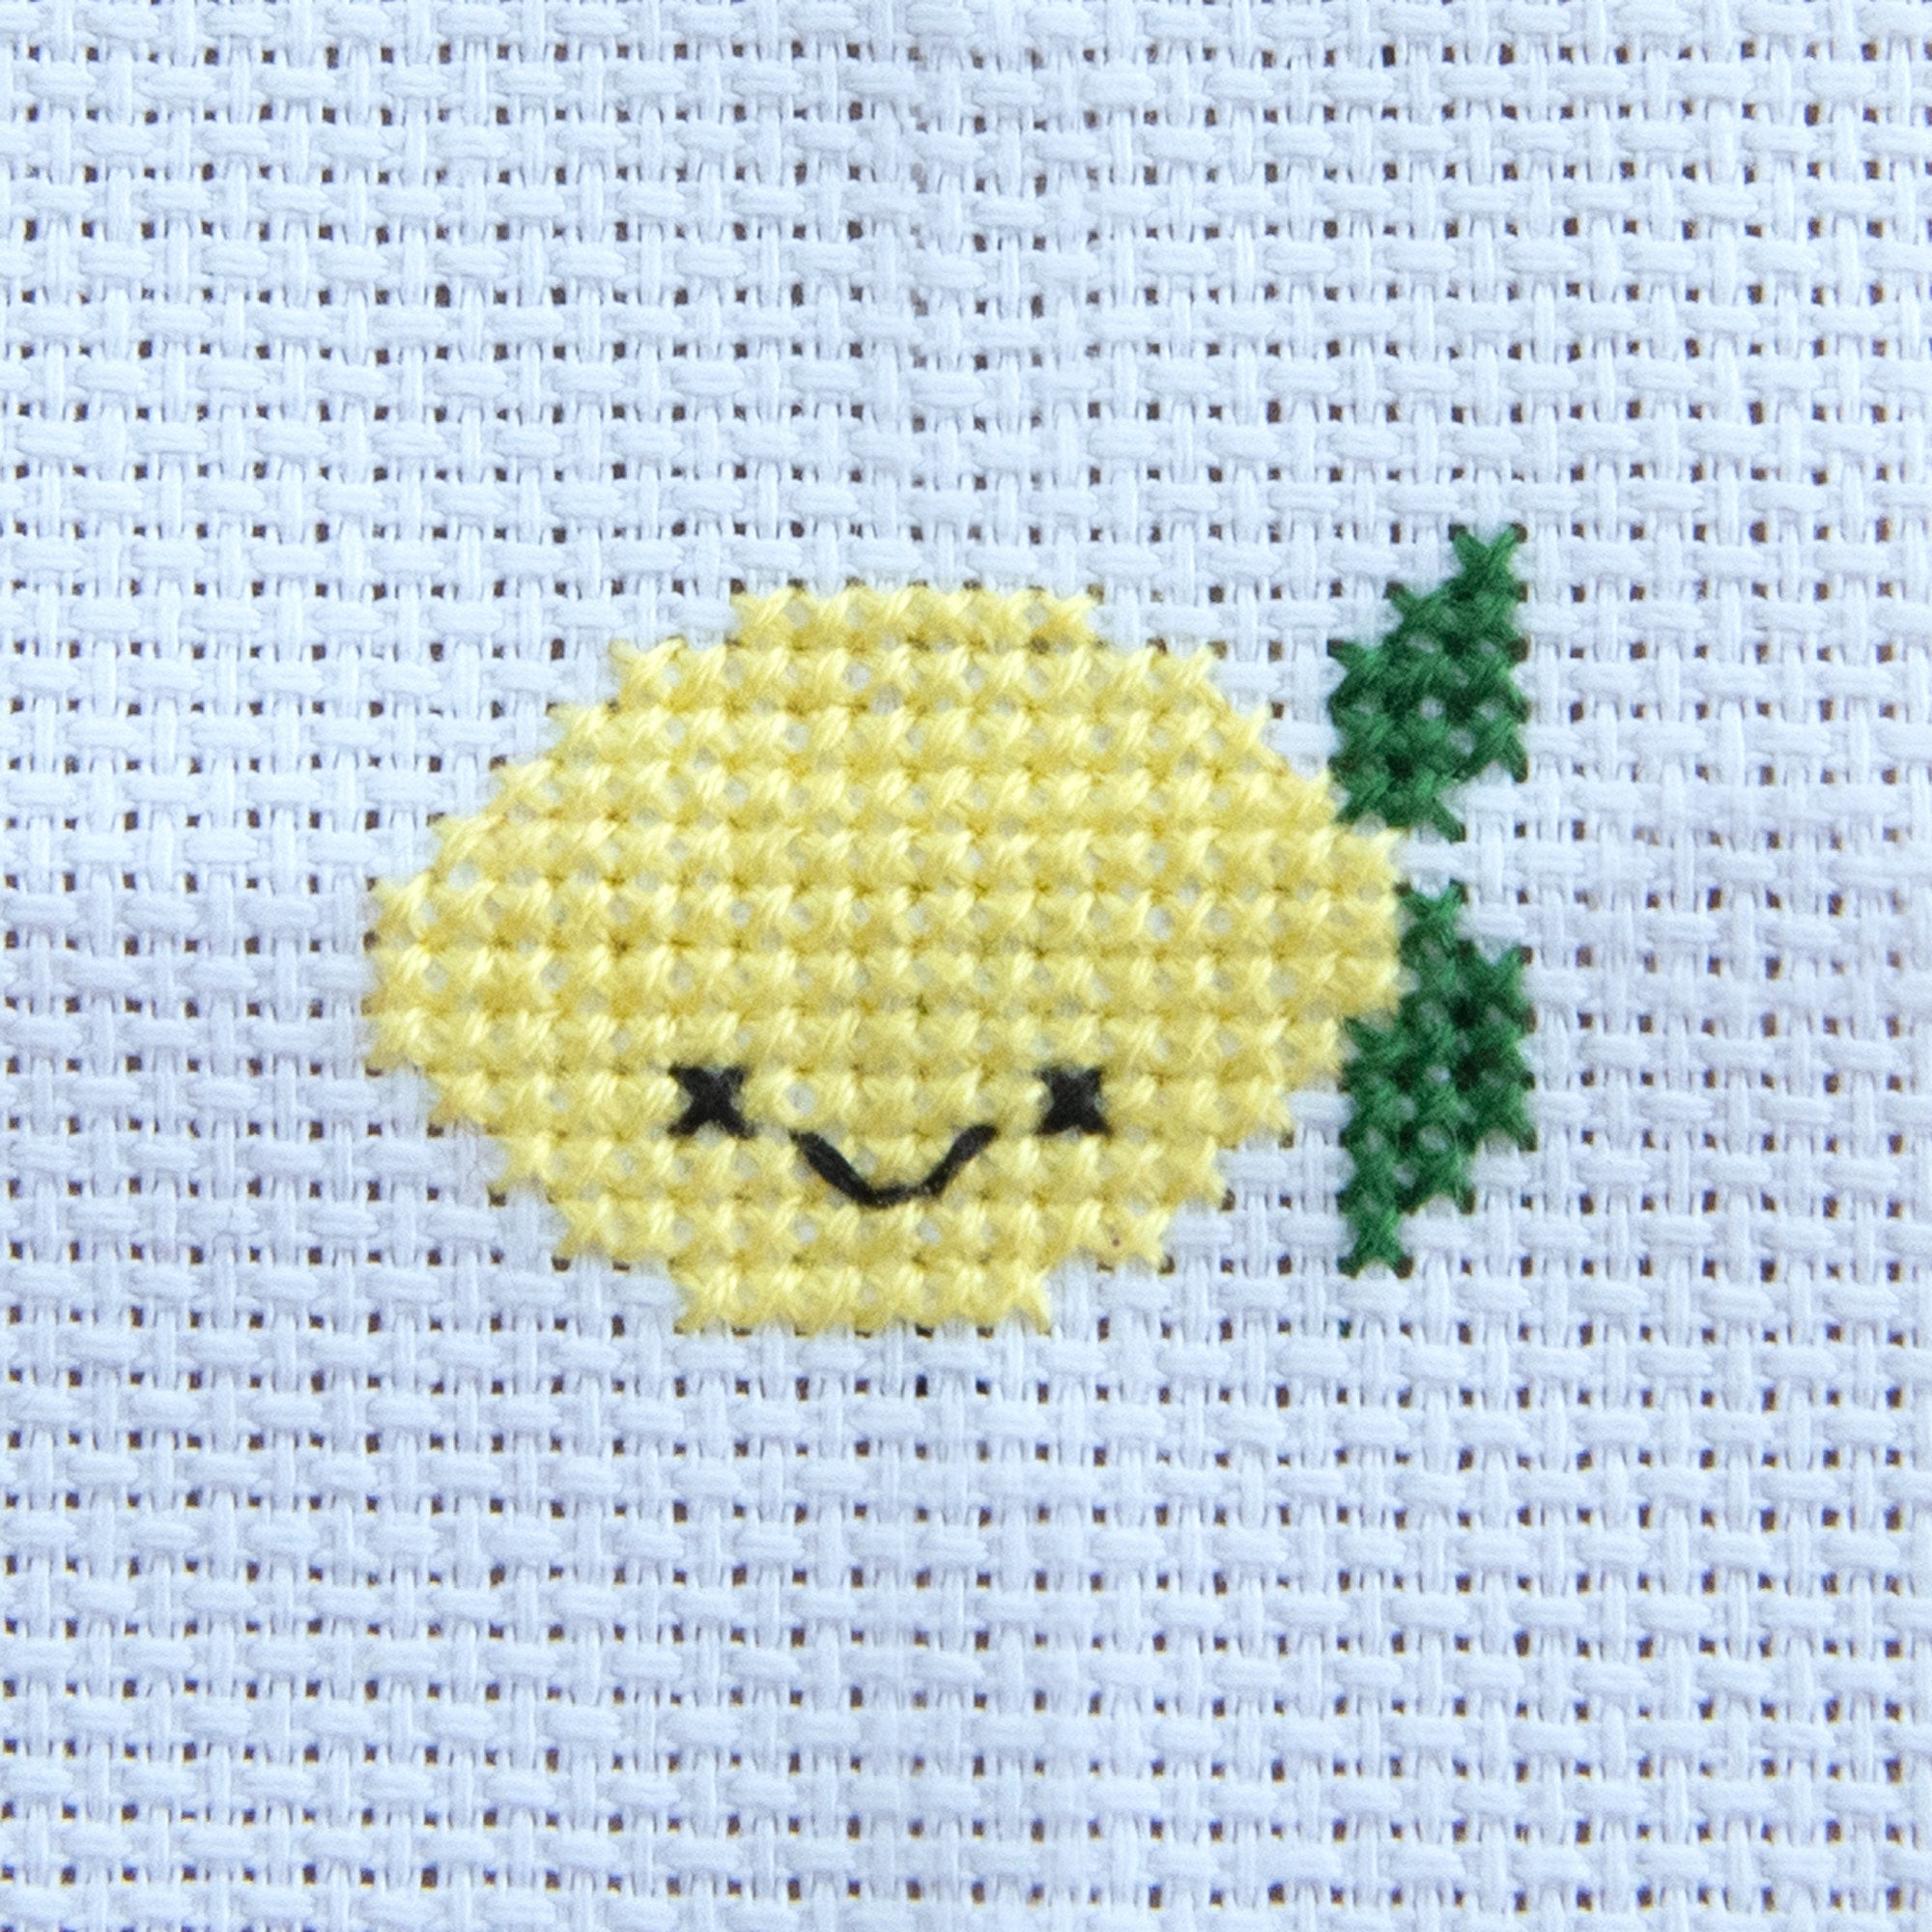 Mini Cross Stitch Kit With Kawaii Lemon In A Matchbox